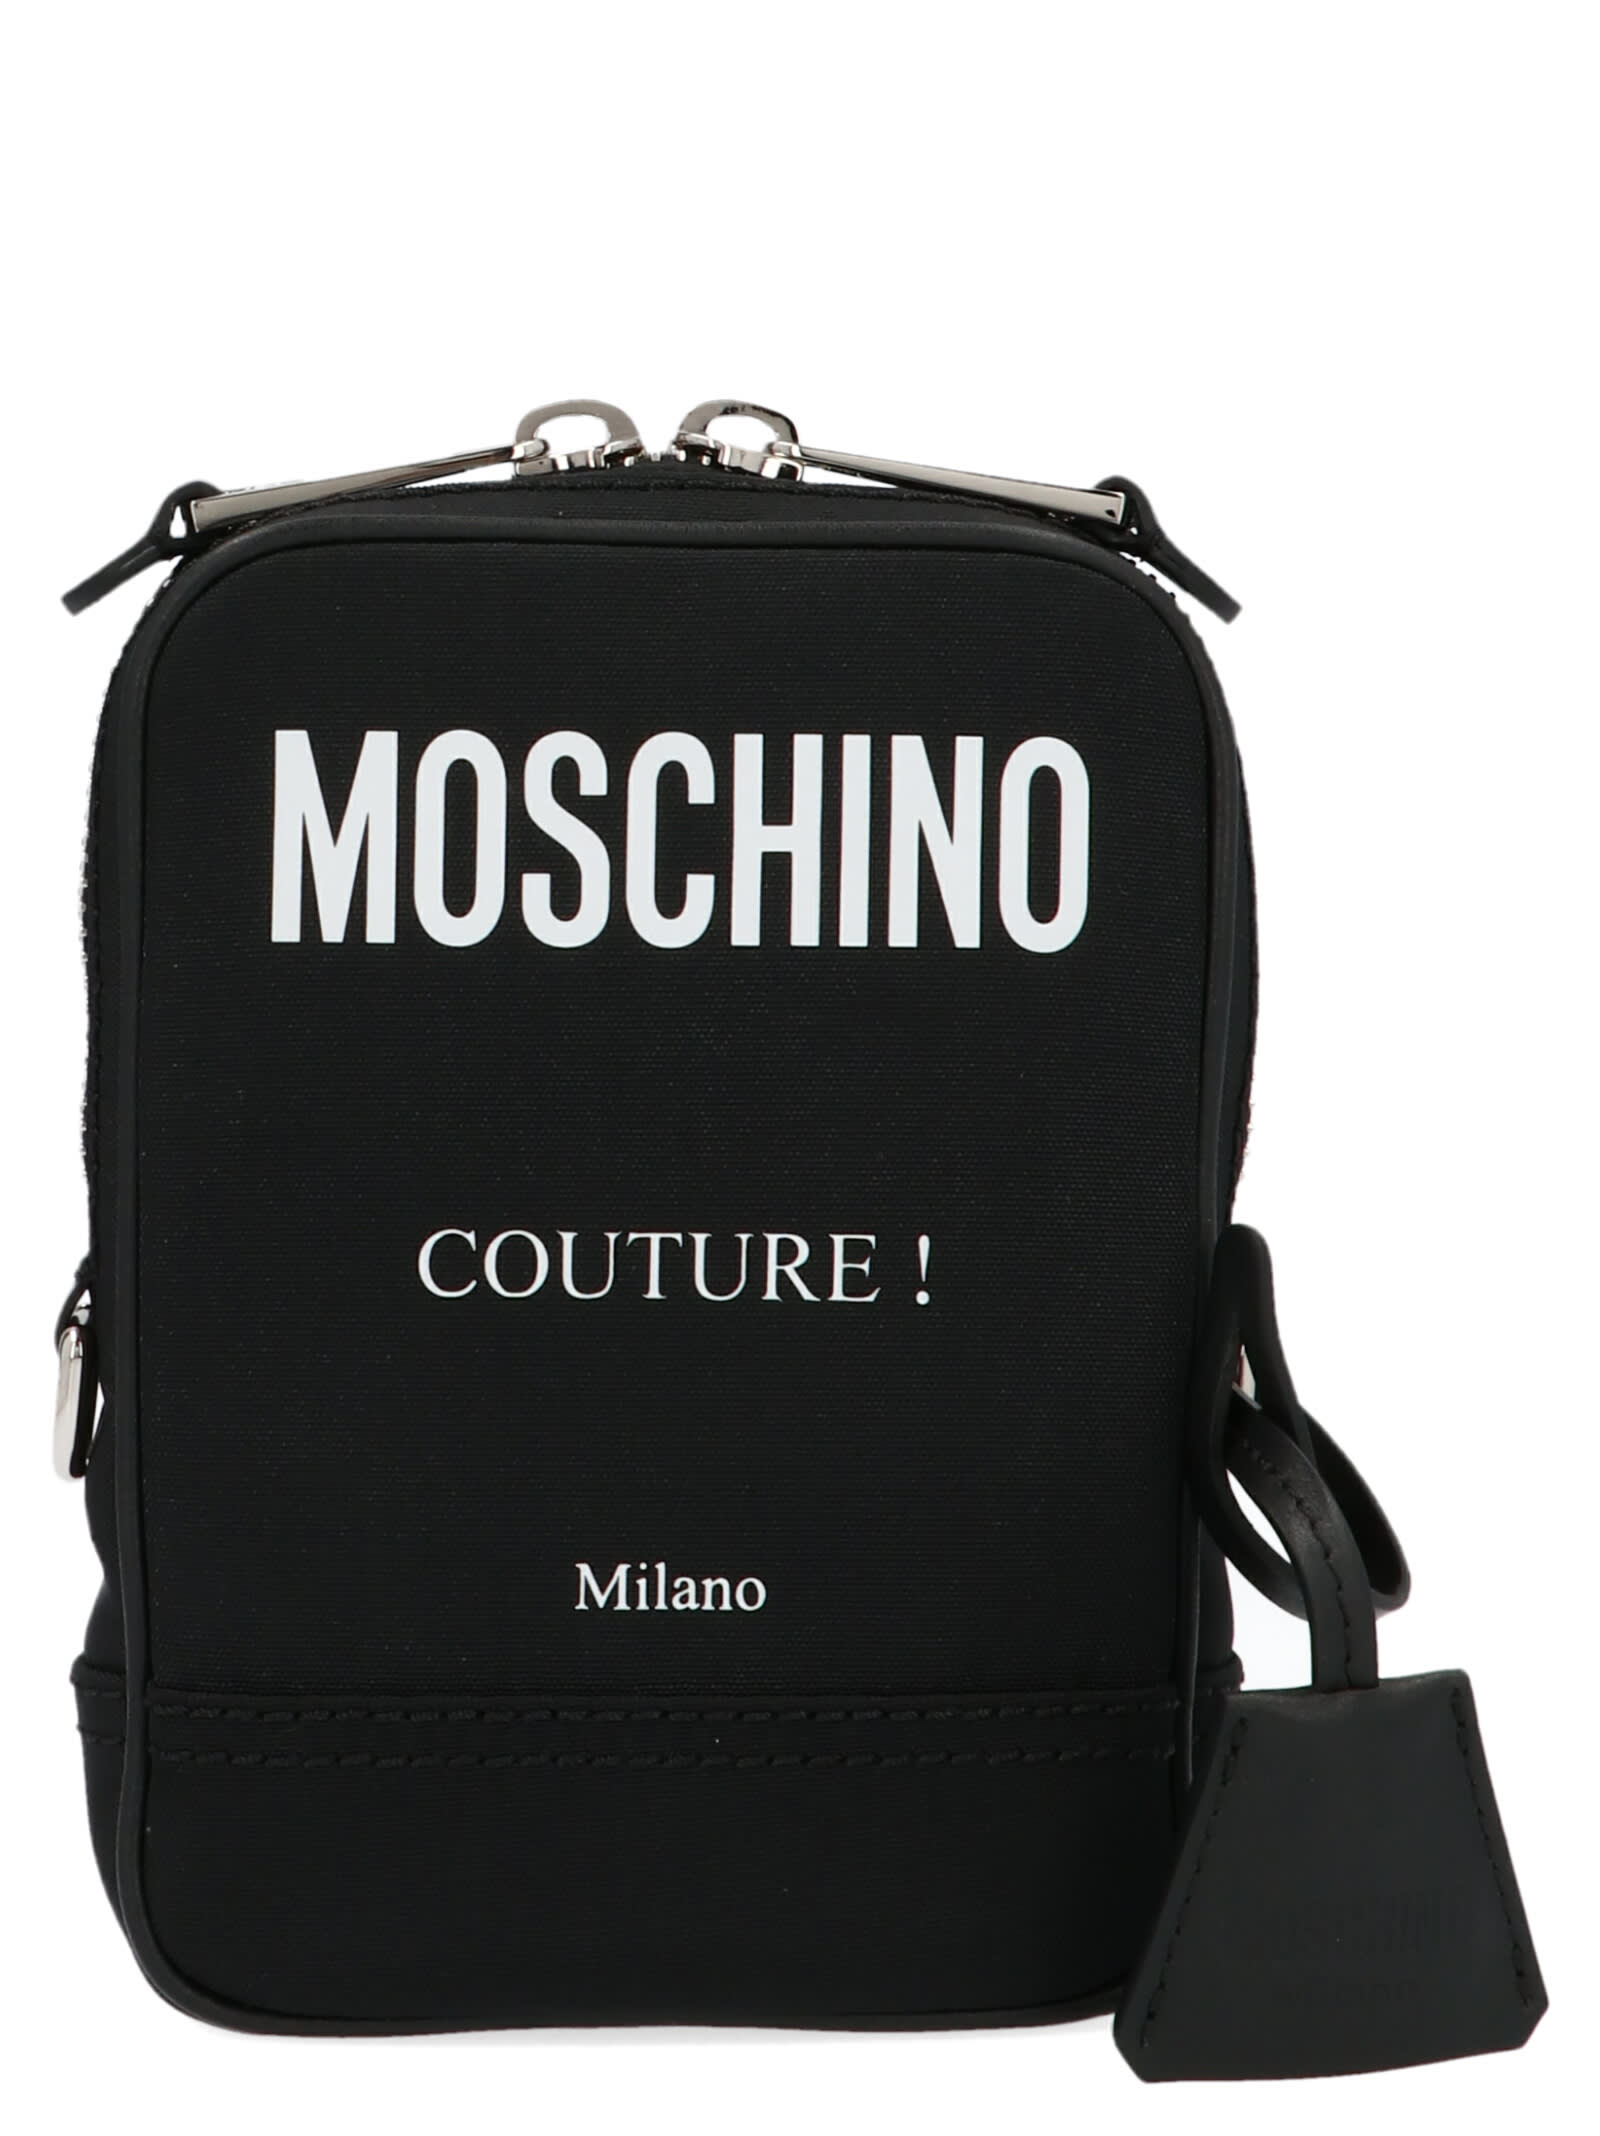 Moschino label Messenger Crossbody Bag